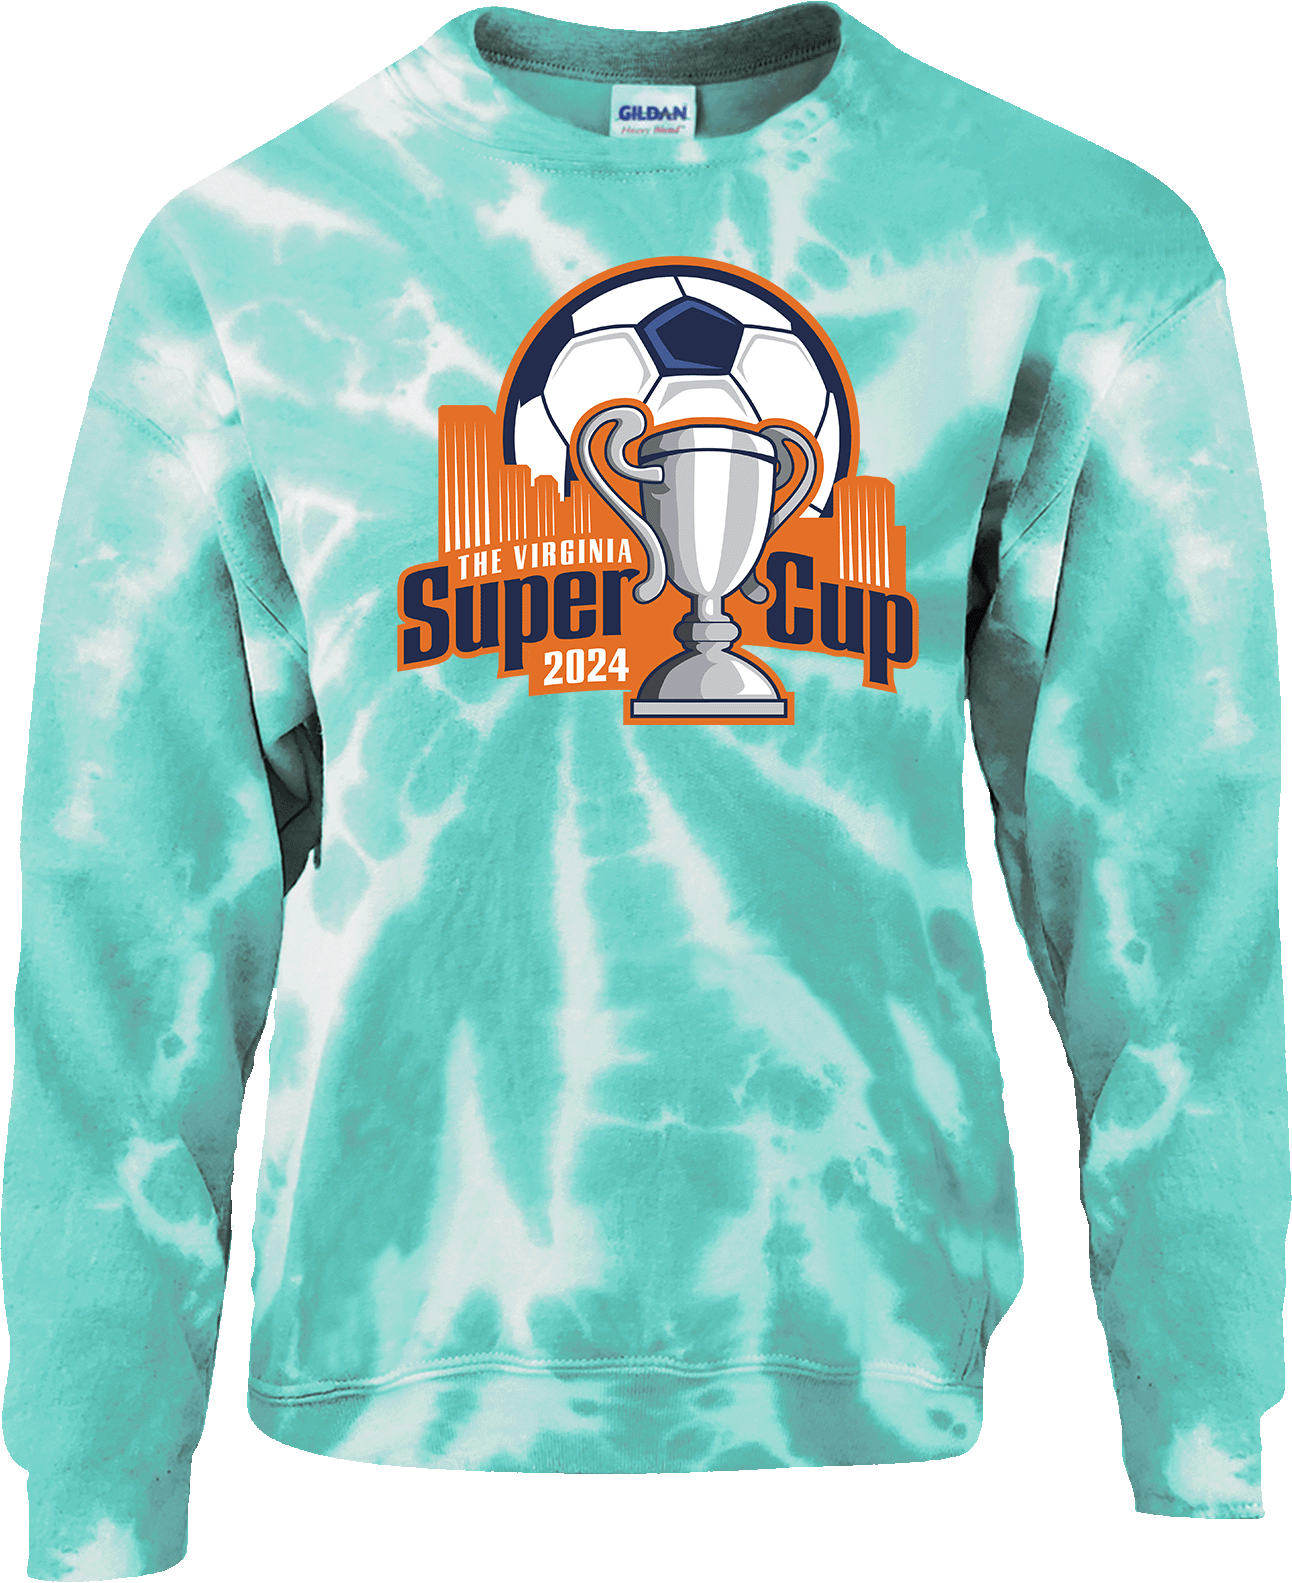 Crew Sweatershirt - 2024 The Virginia Super Cup